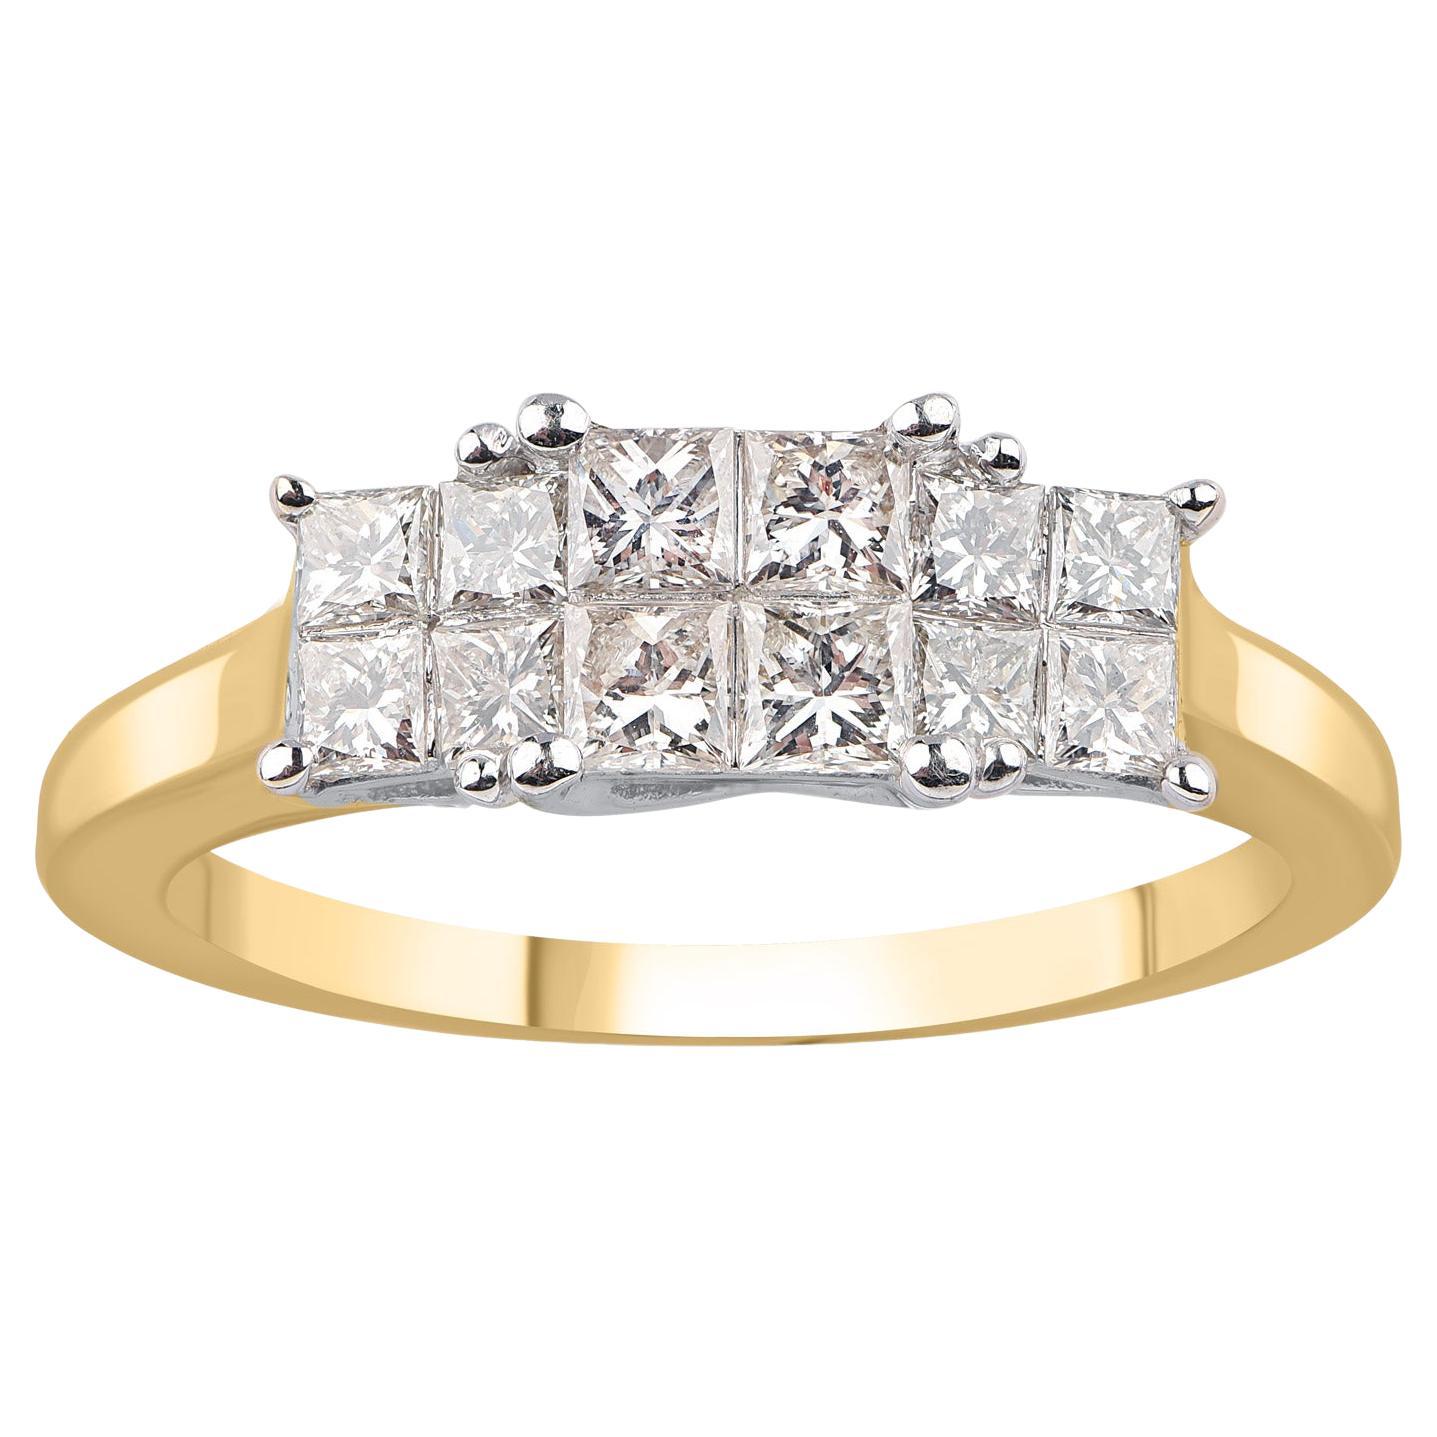 TJD 1.0 Carat Princess Cut Diamond Wedding Ring in 14 Karat Yellow Gold